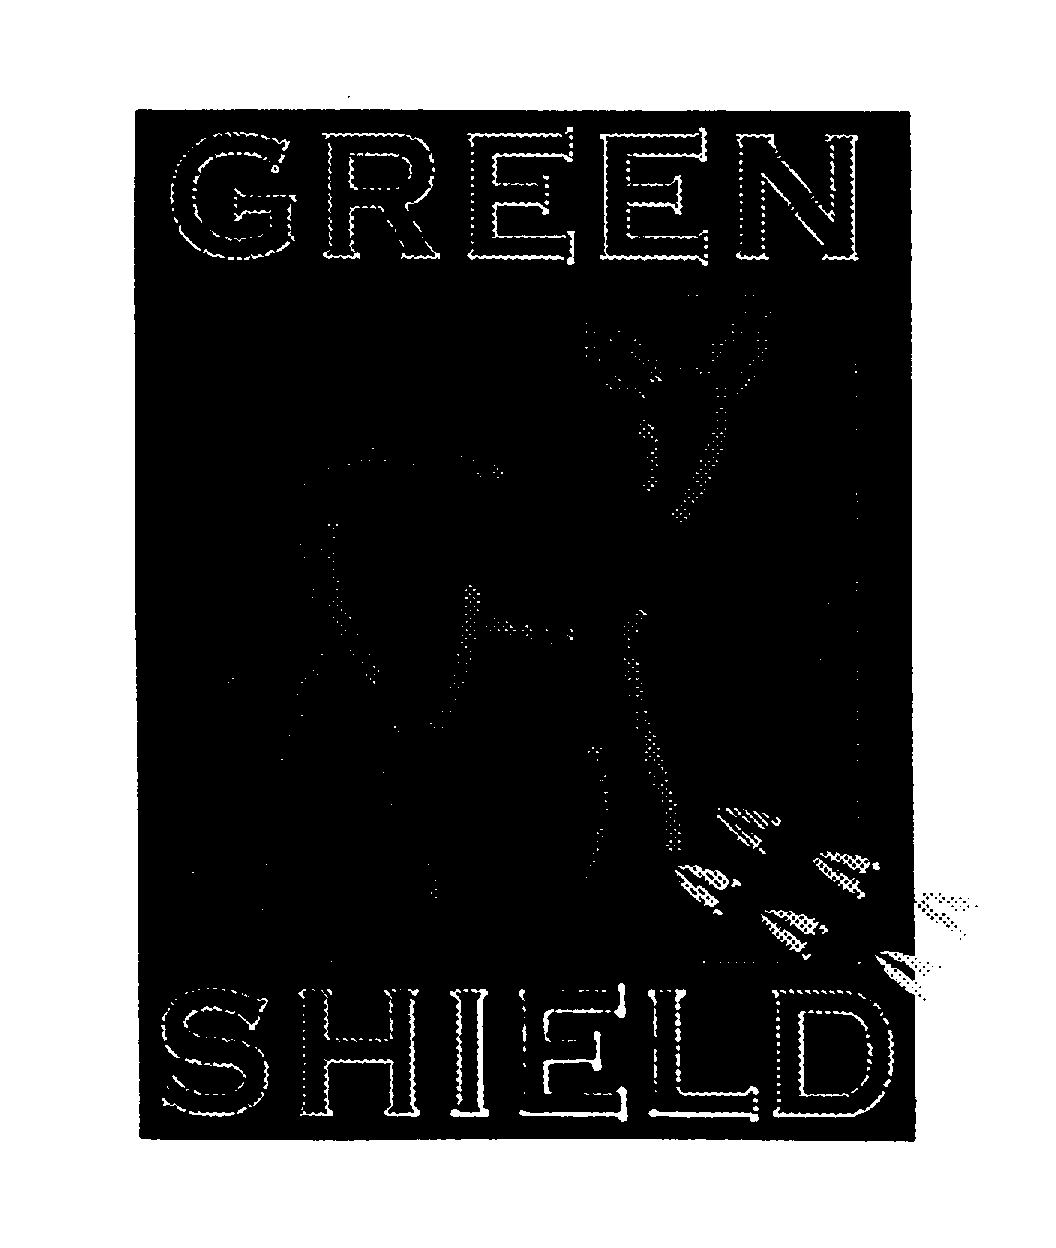 Trademark Logo GREEN SHIELD